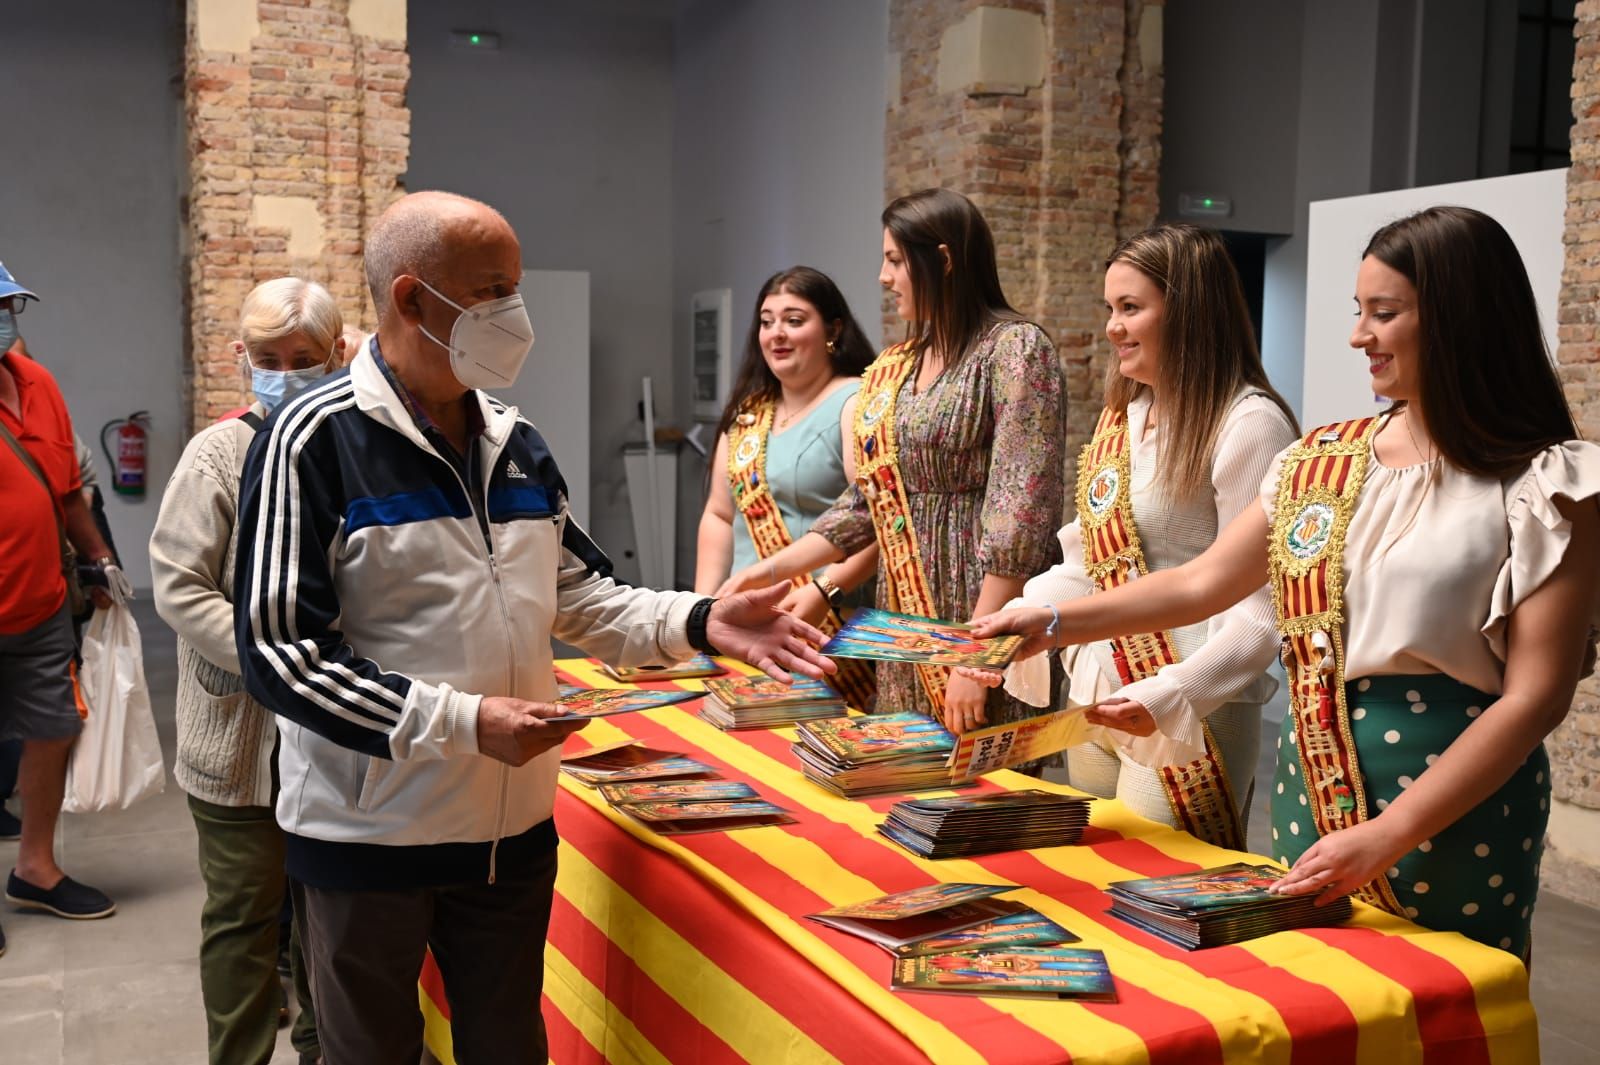 Arranca el reparto de los 'llibrets de festes' de Sant Pasqual en Vila-real